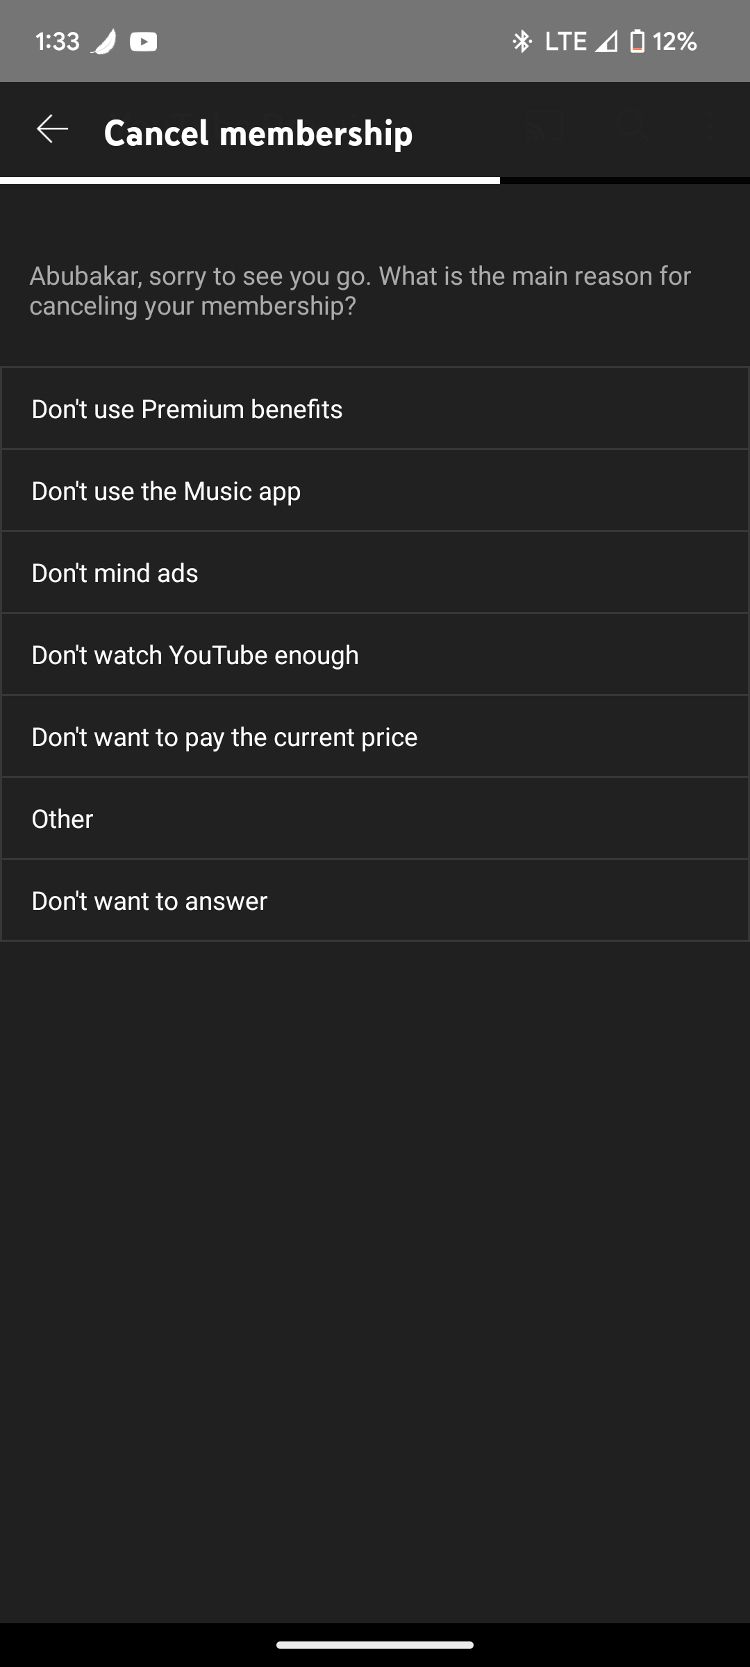 Screenshot showing YouTube app premium membership cancellation reasons options